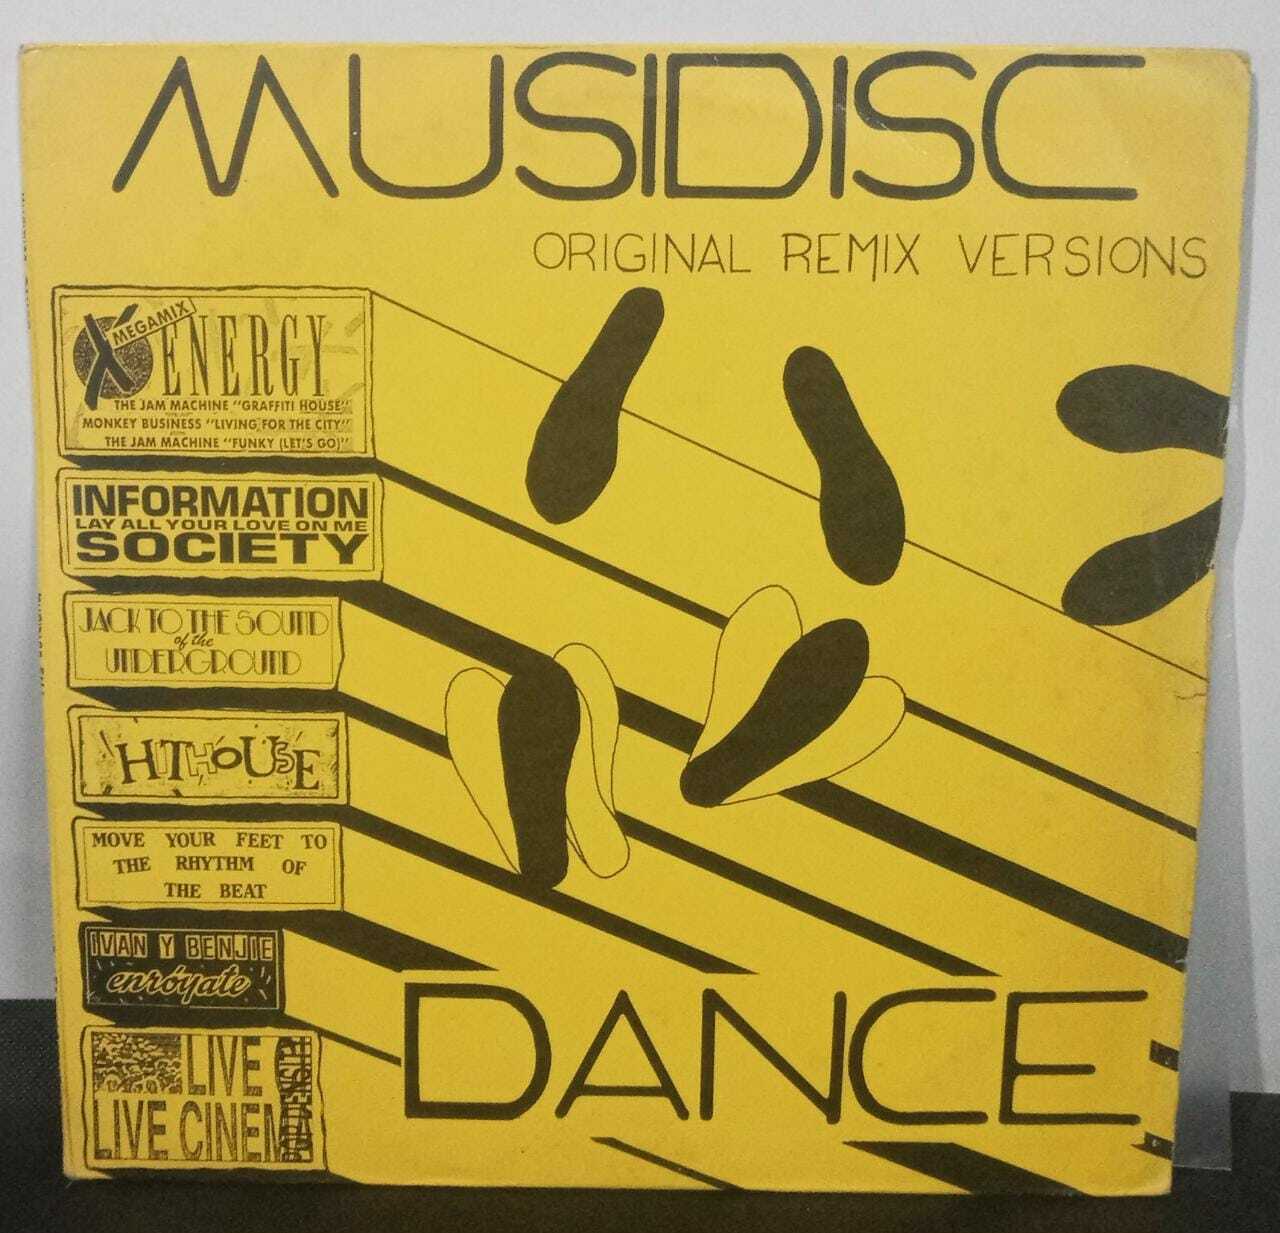 Vinil - Musidisc Dance - Original Remix Versions (Argentina)